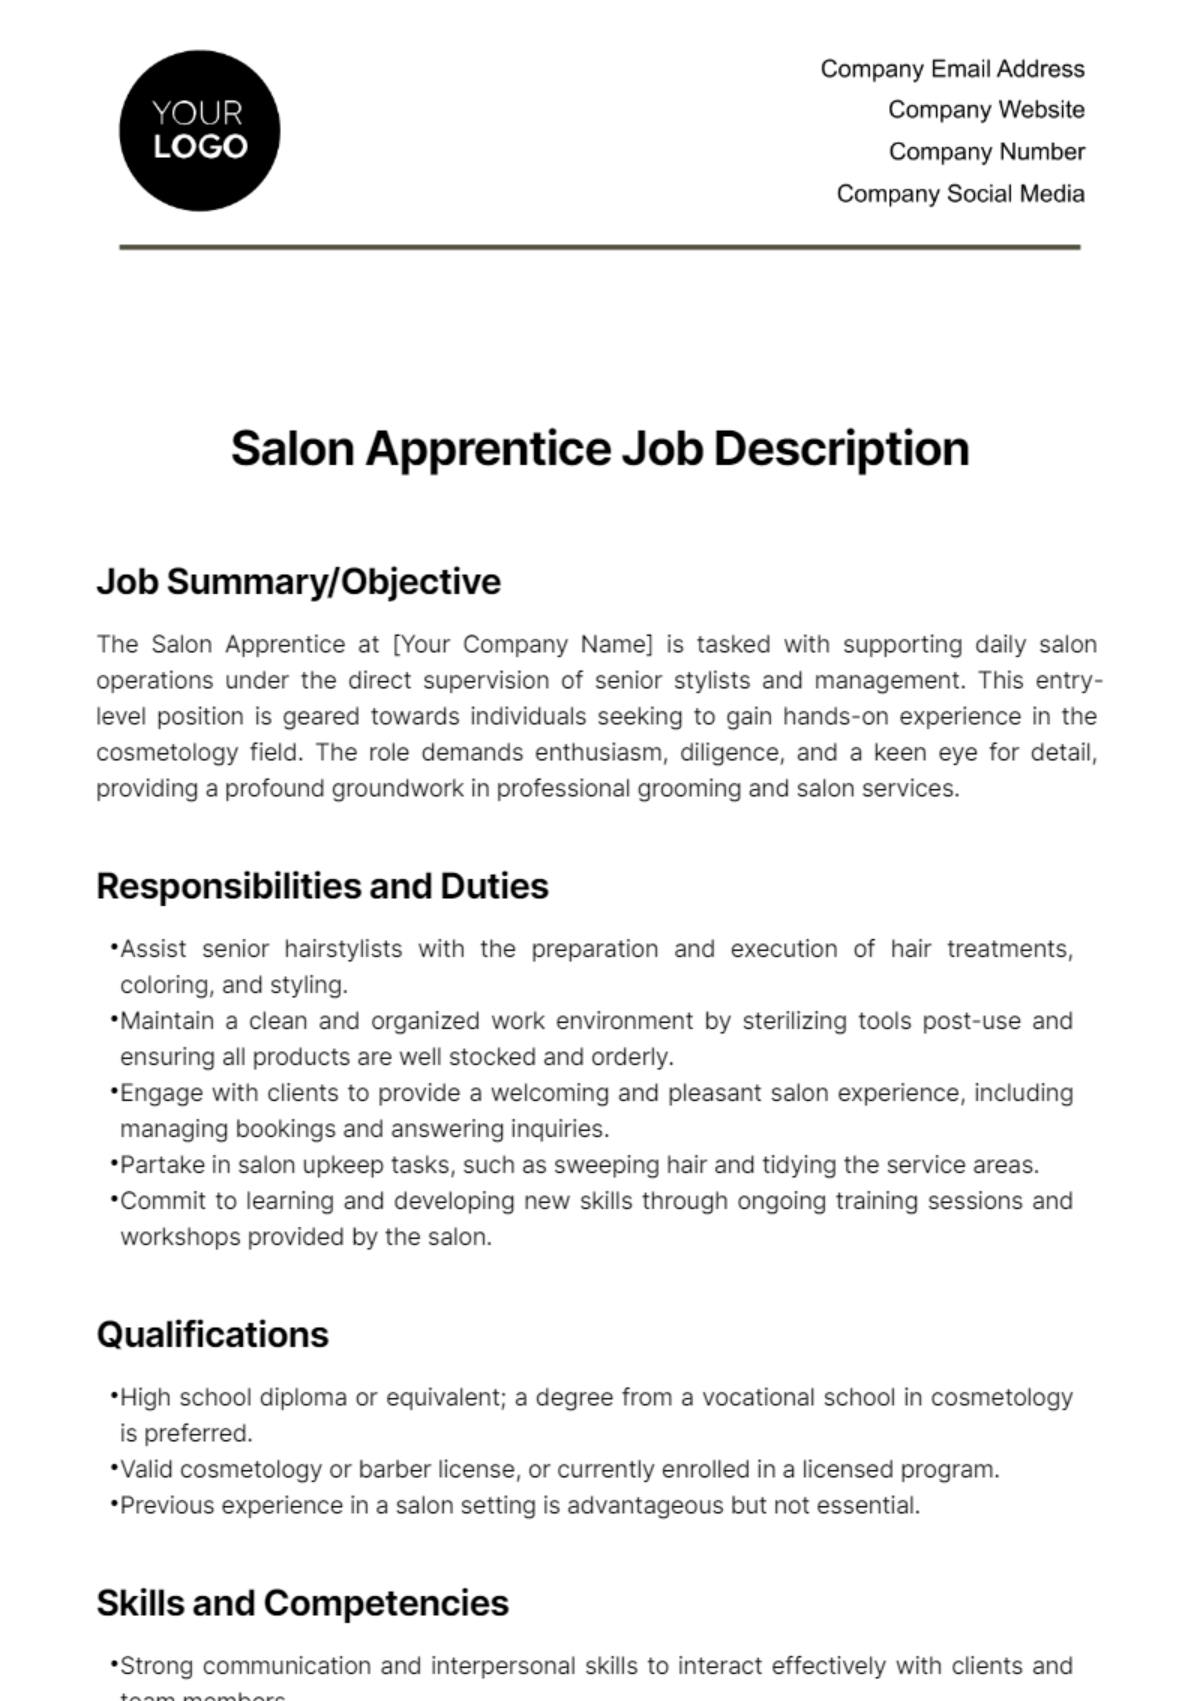 Free Salon Apprentice Job Description Template